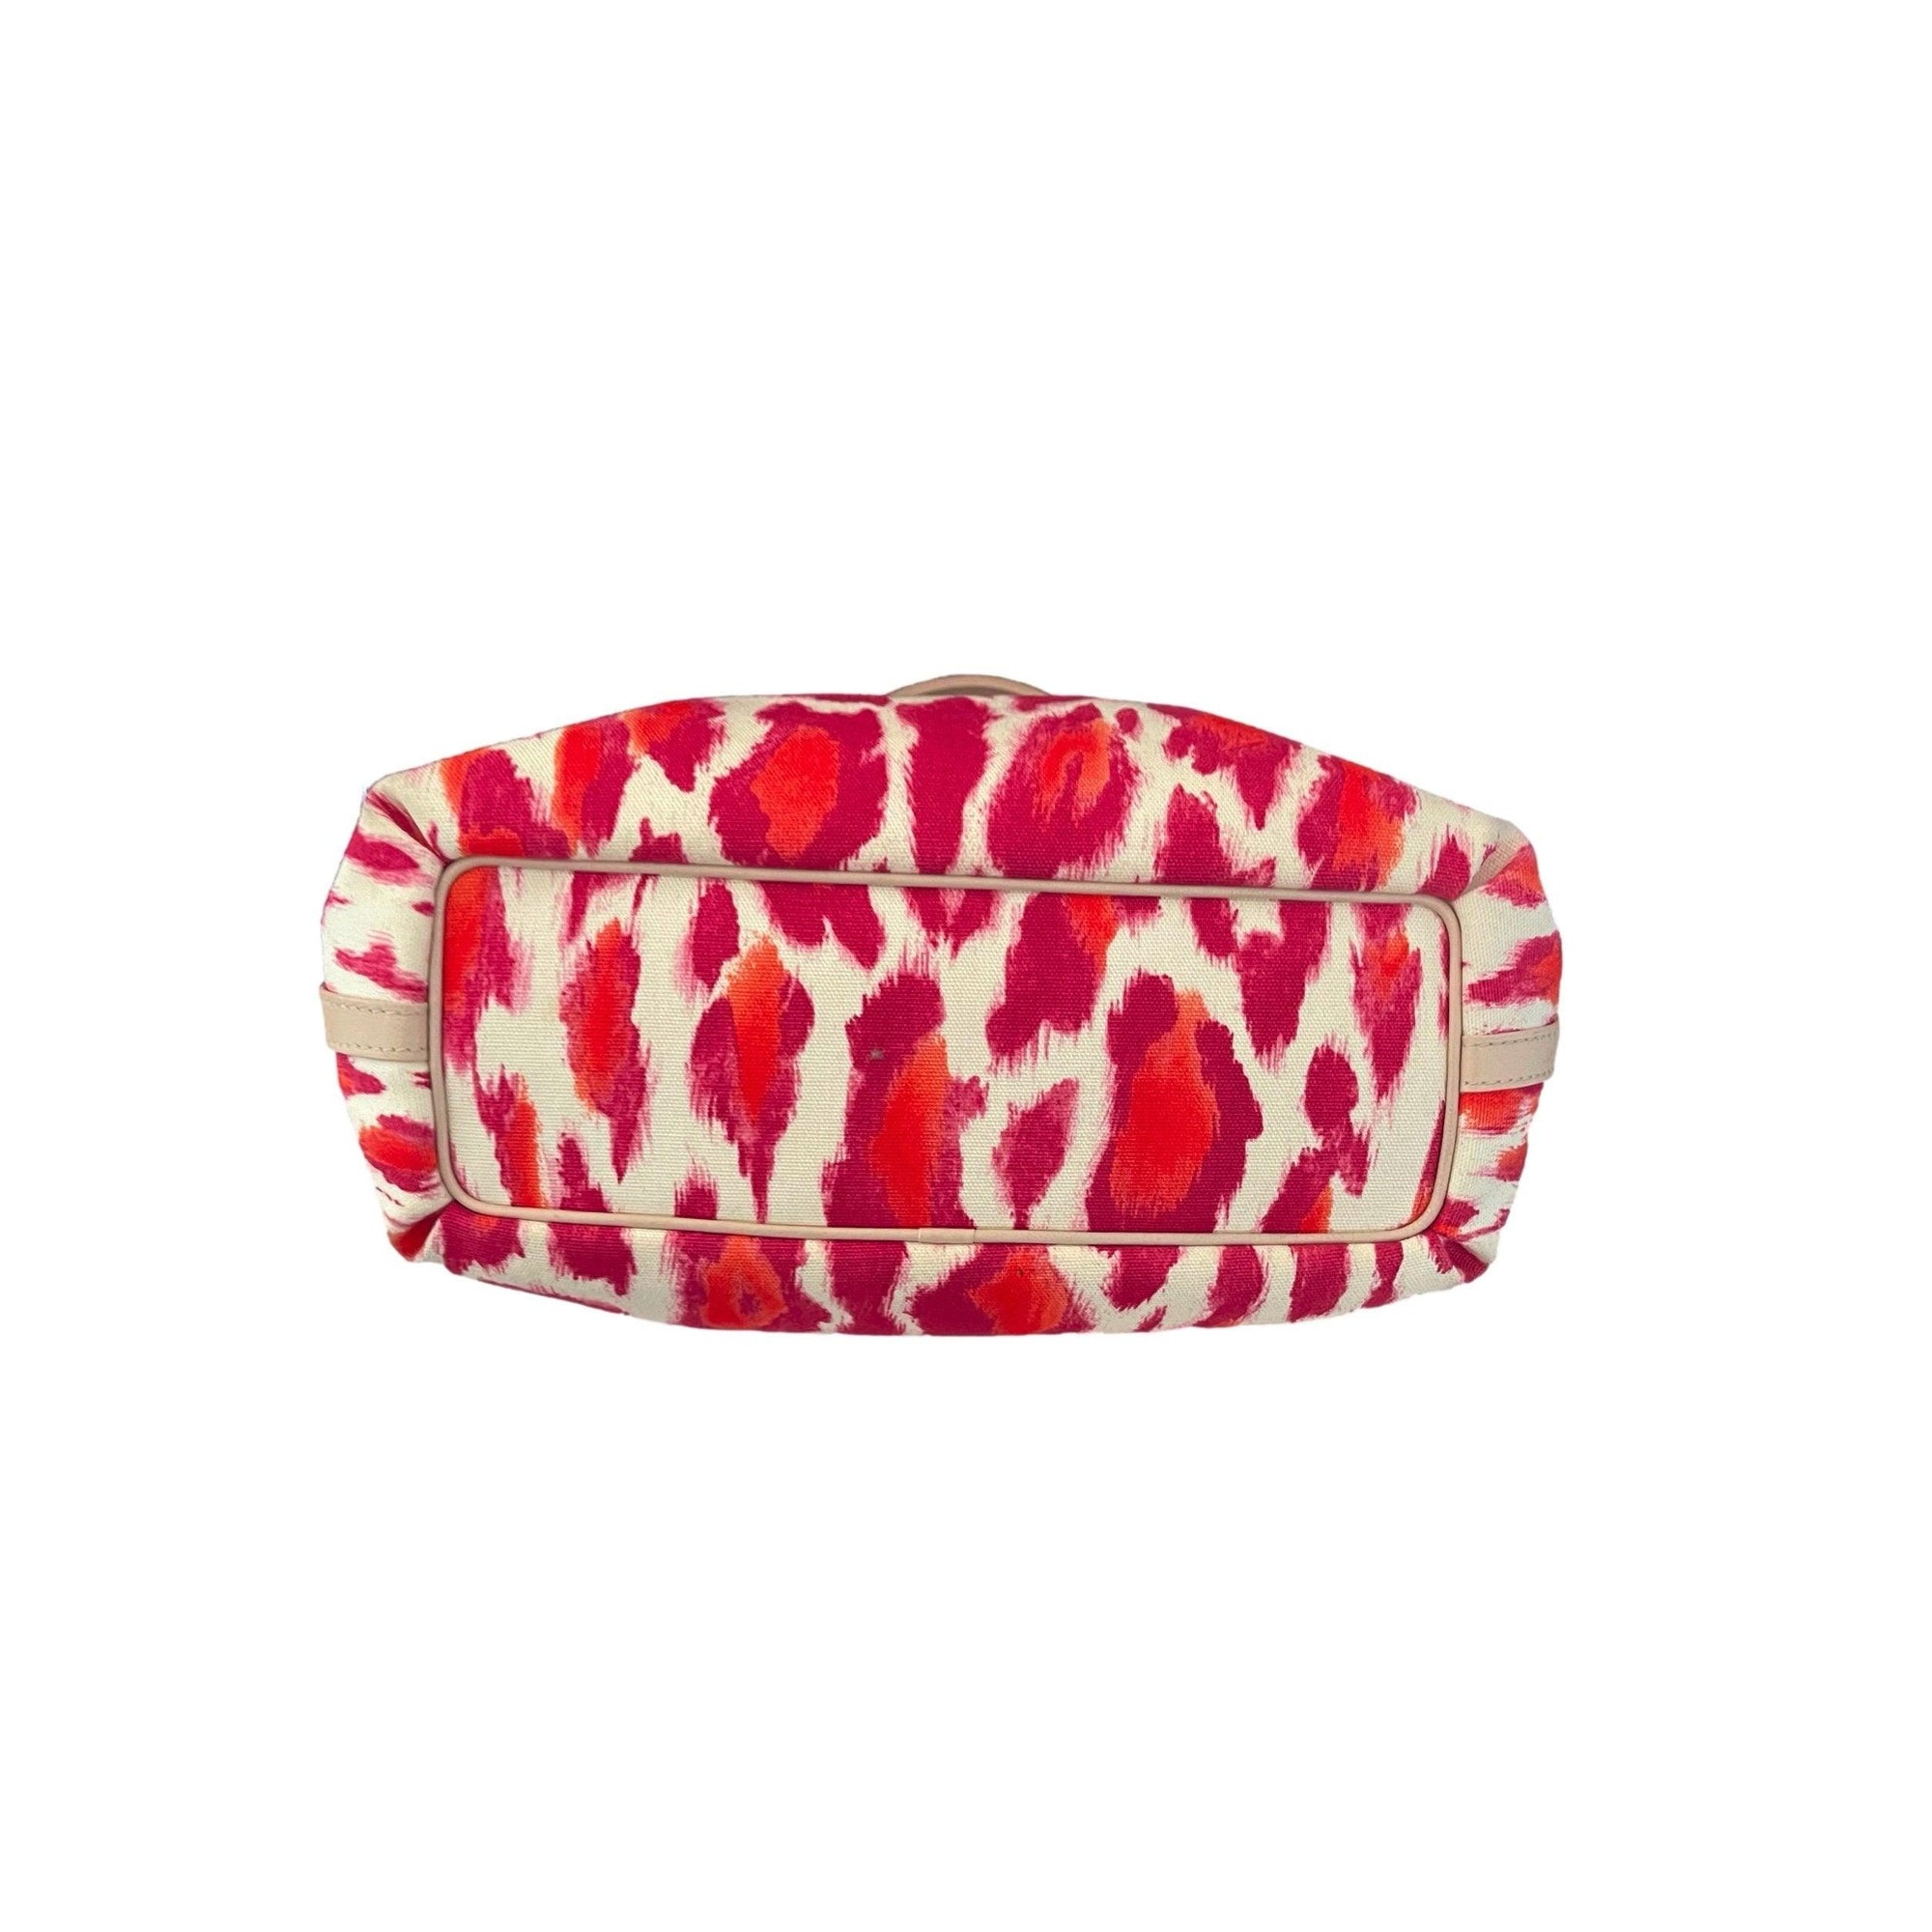 Dior Pink Cheetah Shoulder Bag - Handbags